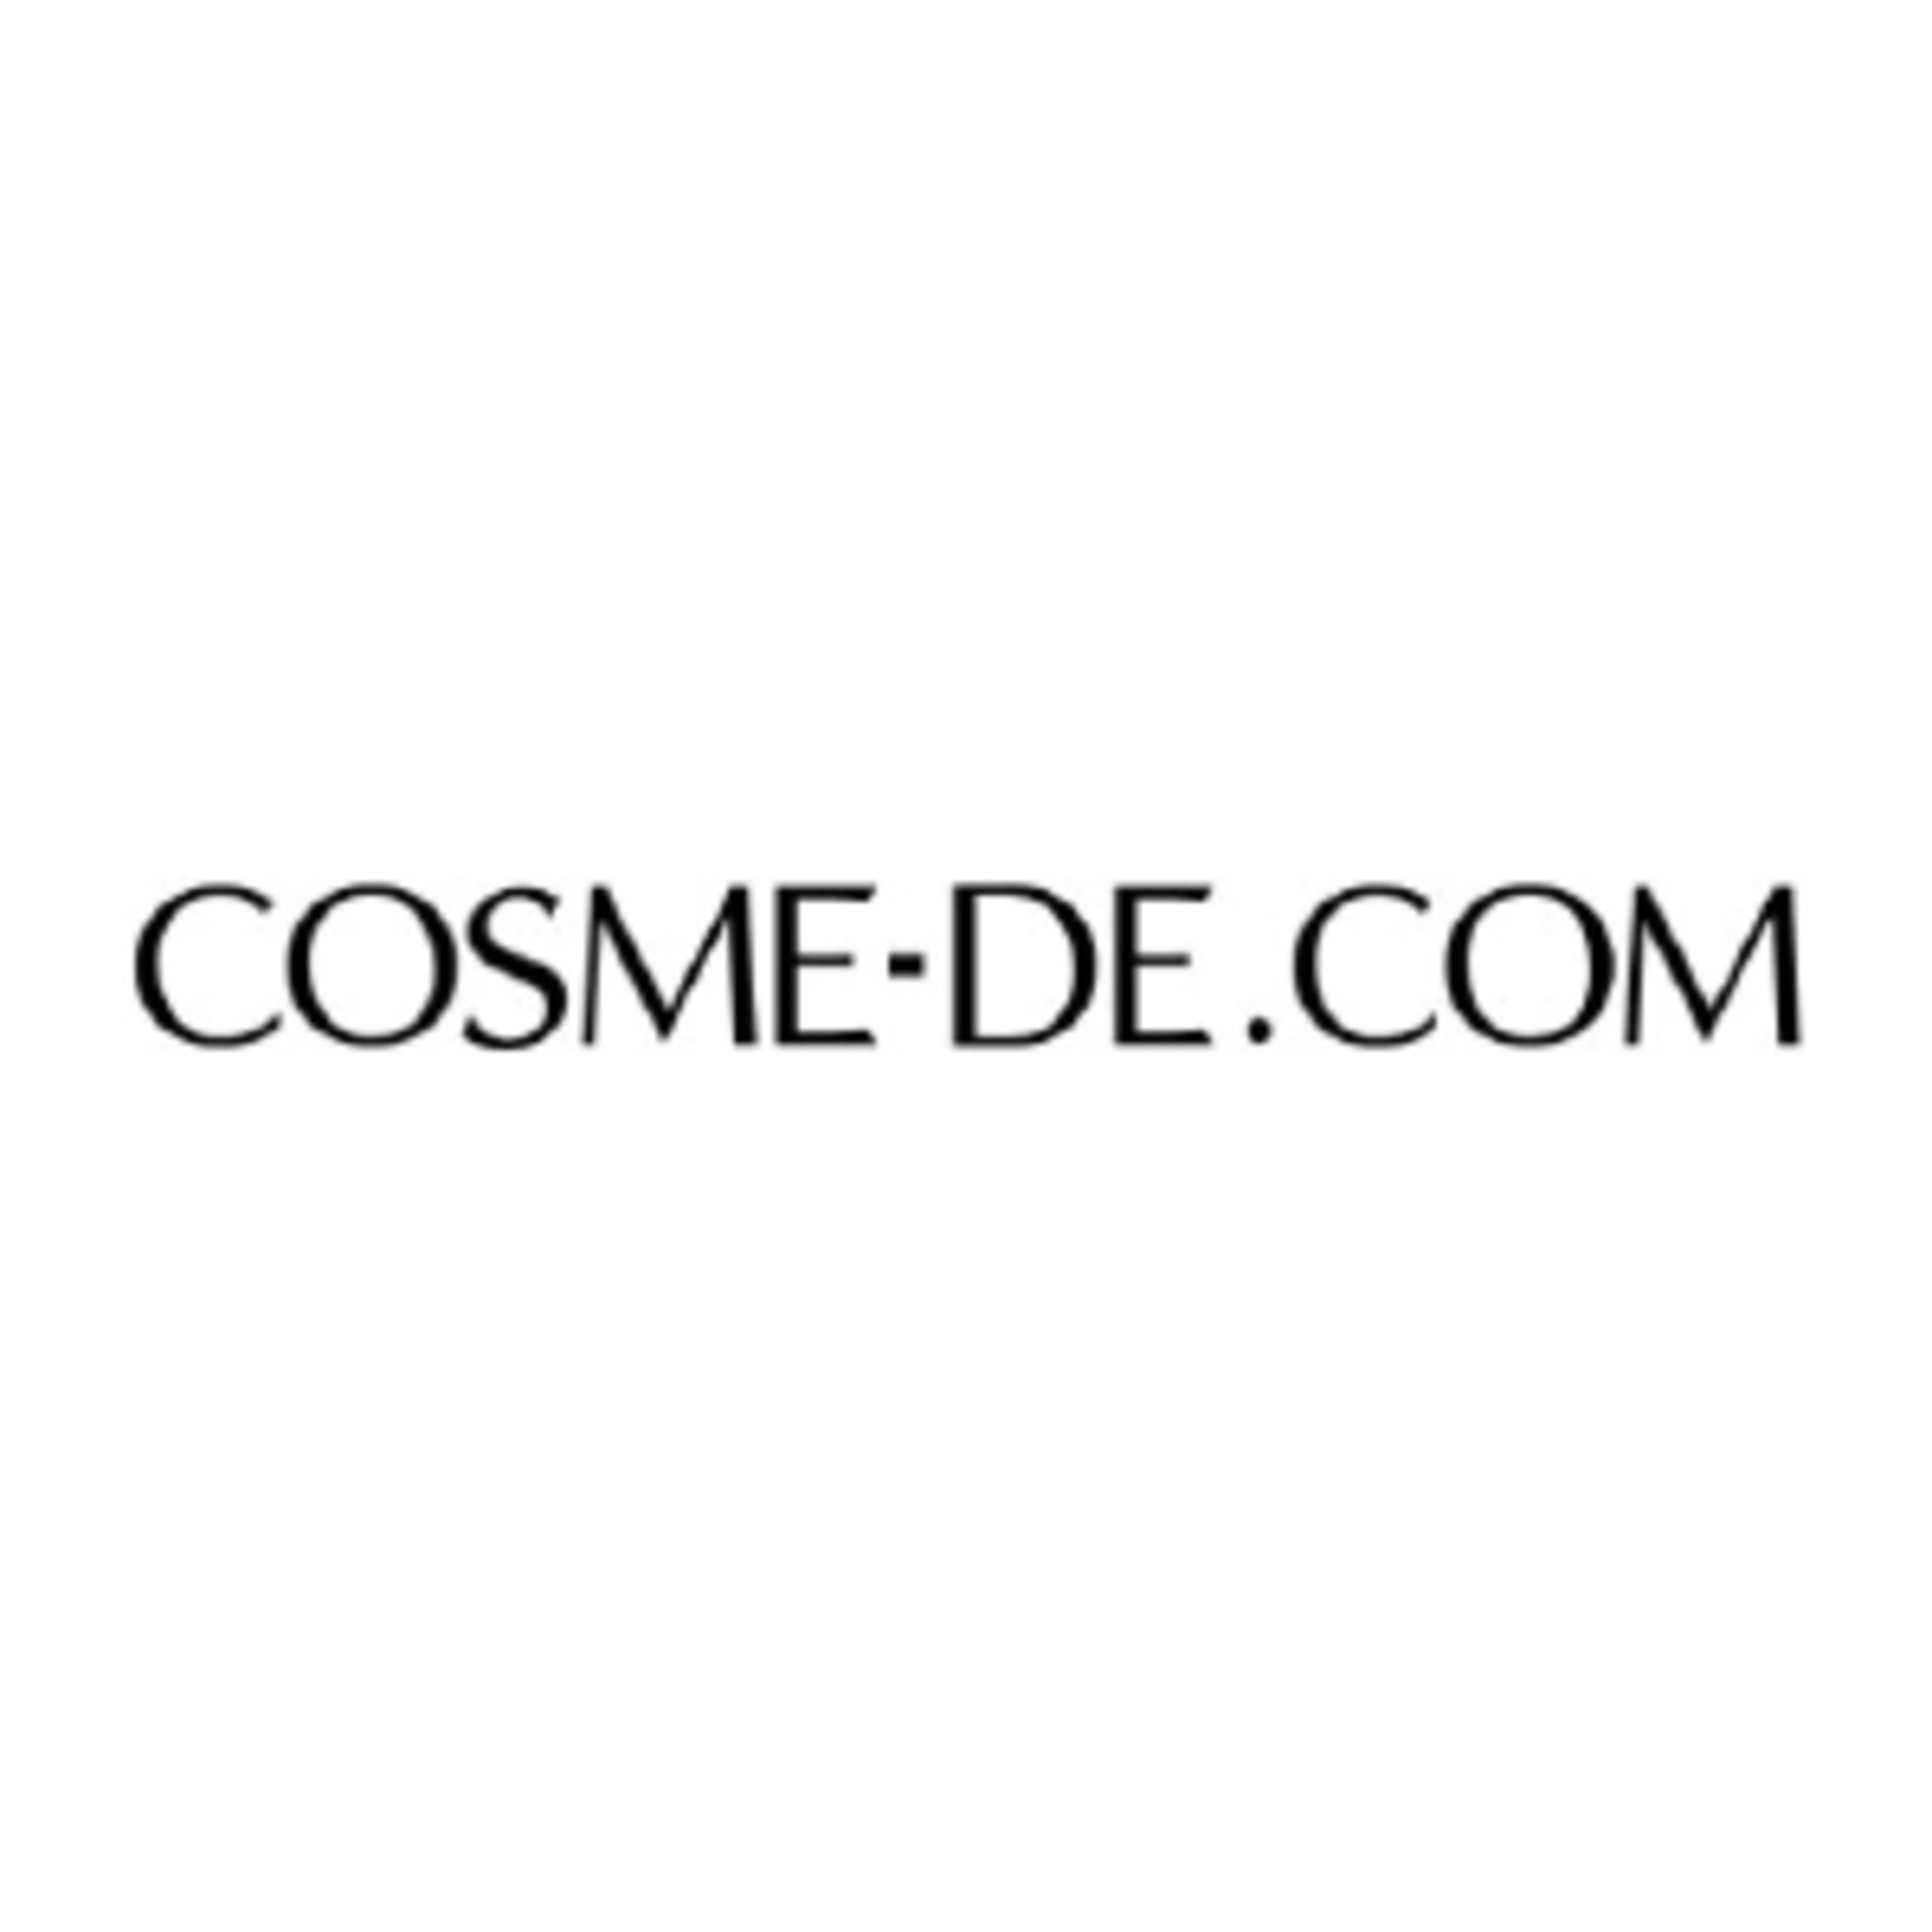 Cosme-DeCode